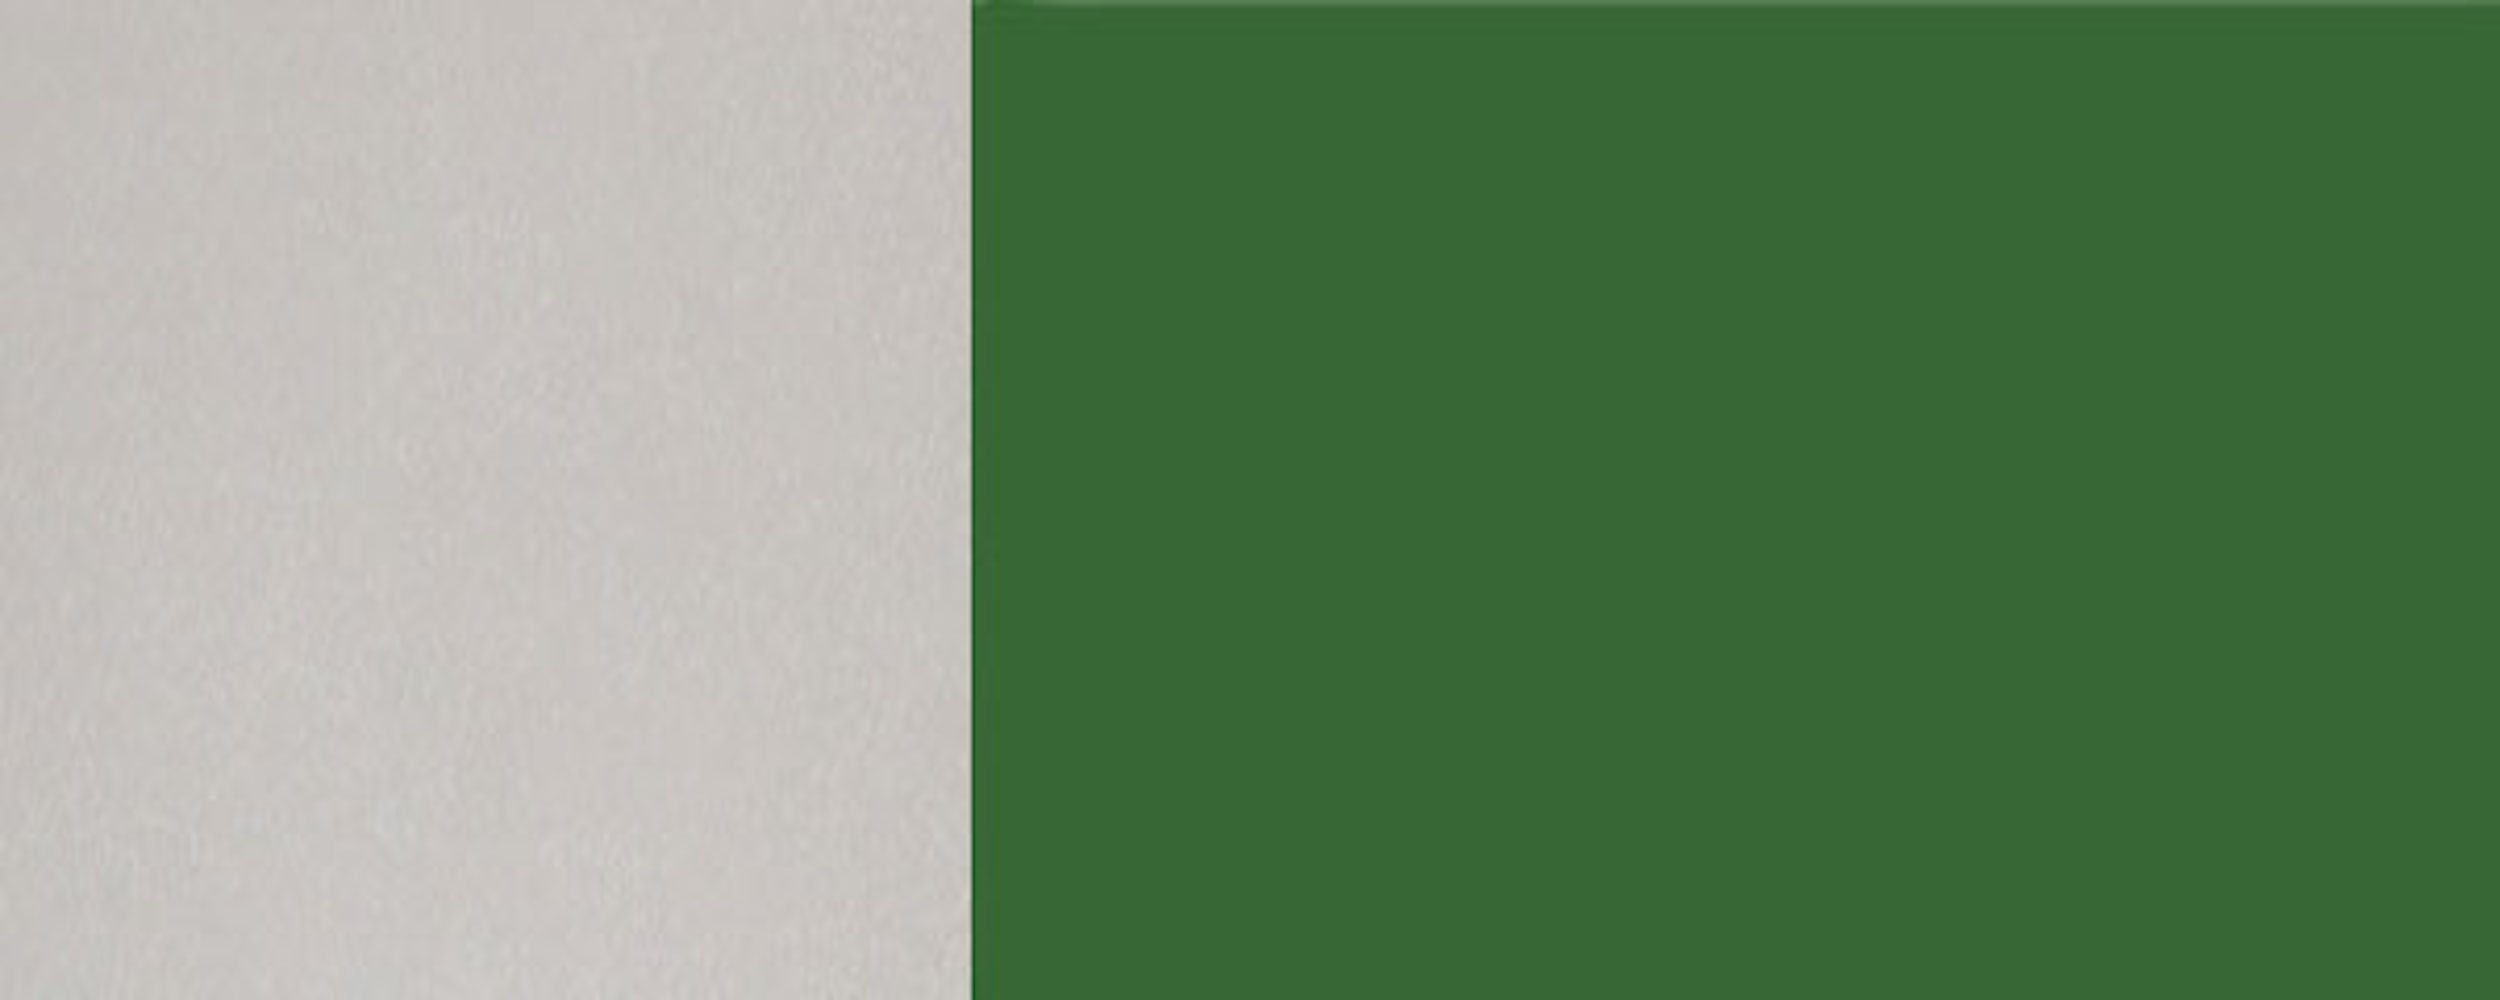 (Florence) Ausführung und smaragdgrün grifflos Florence 1-türig RAL Front-, Hochglanz 40cm Feldmann-Wohnen 6001 Glashängeschrank wählbar Korpusfarbe